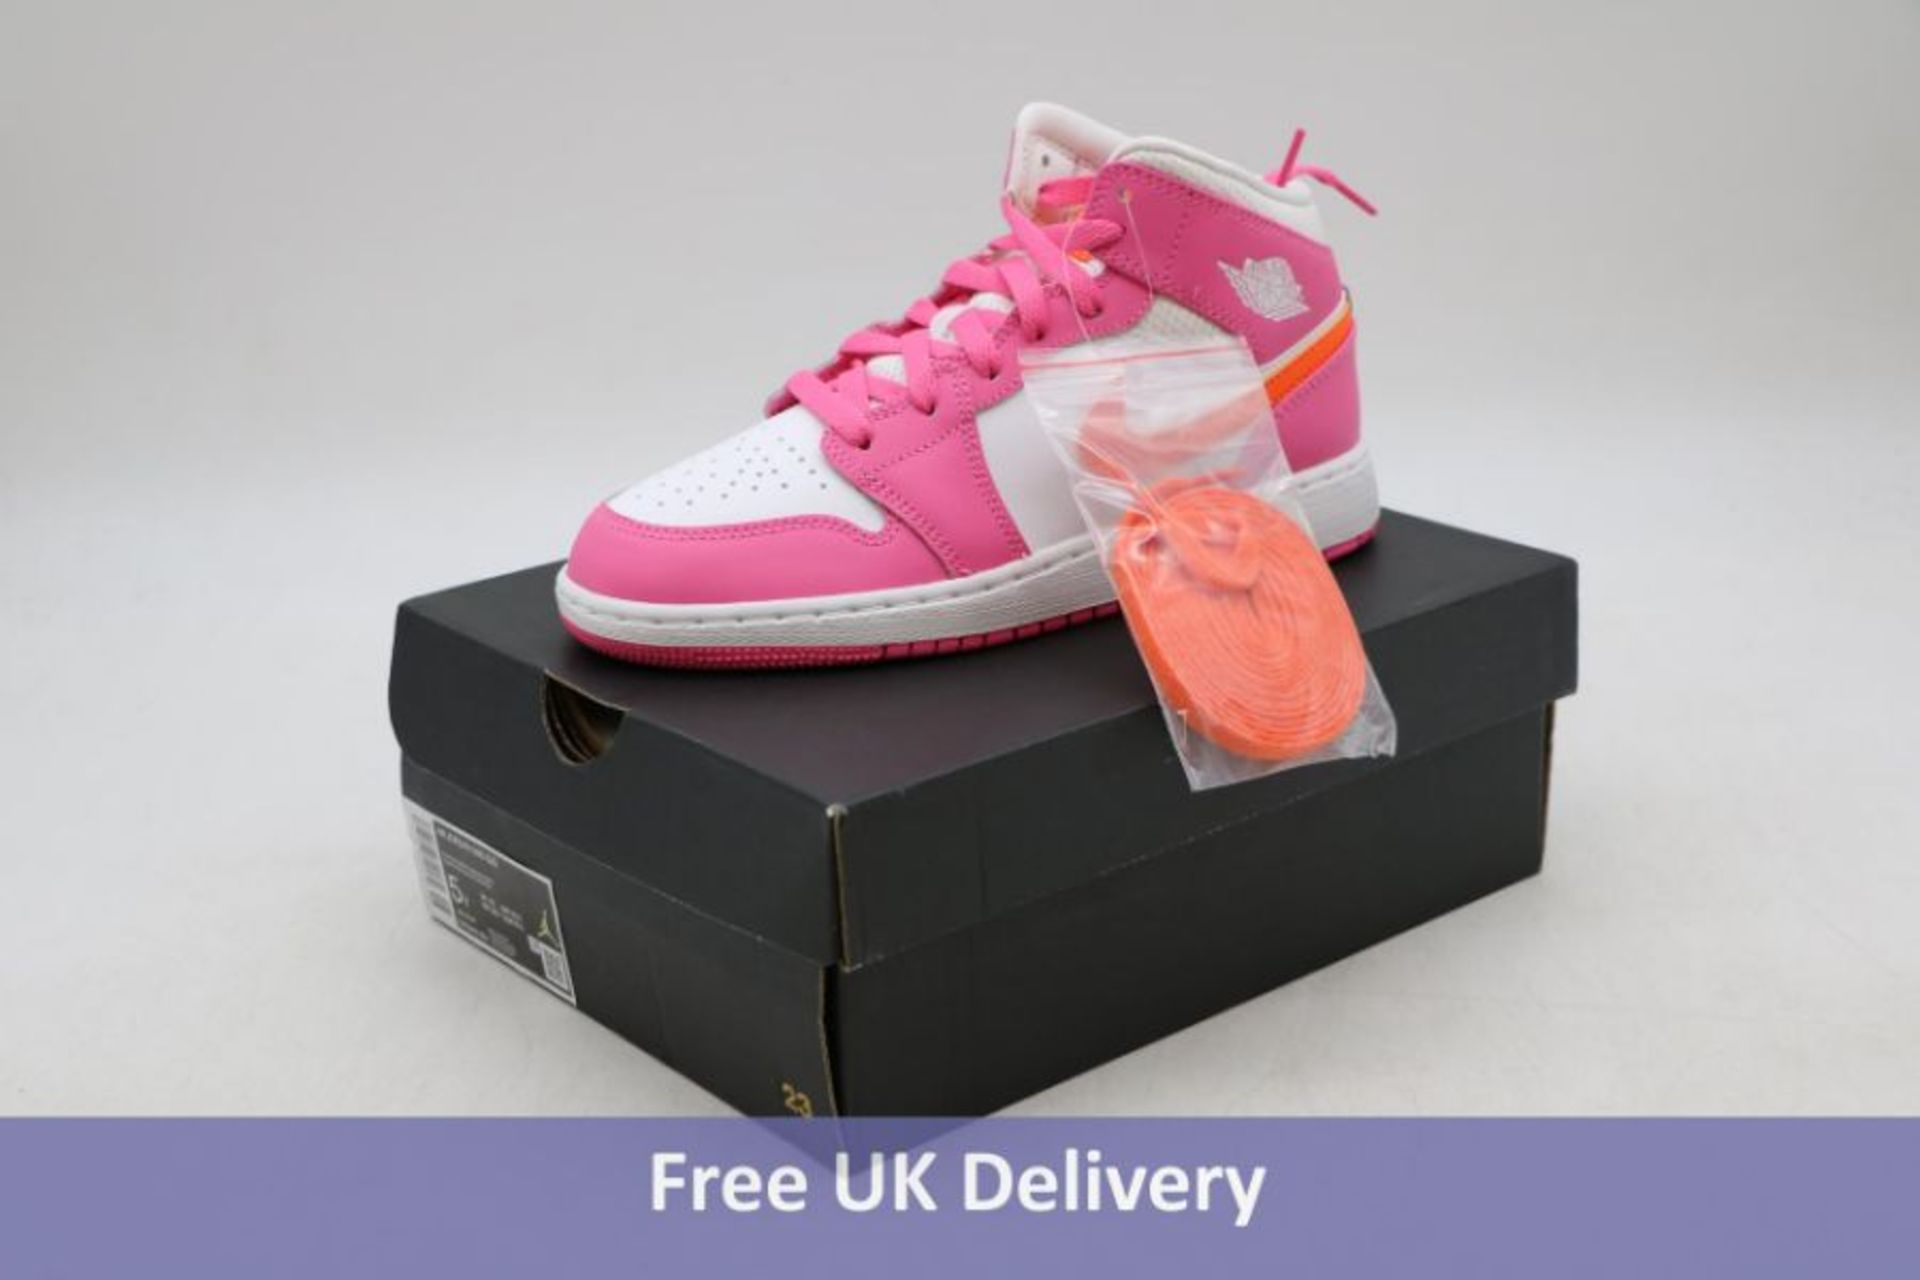 Air Jordan 1 Mid GS Women's Trainers, Pink/Orange/White, UK 4.5